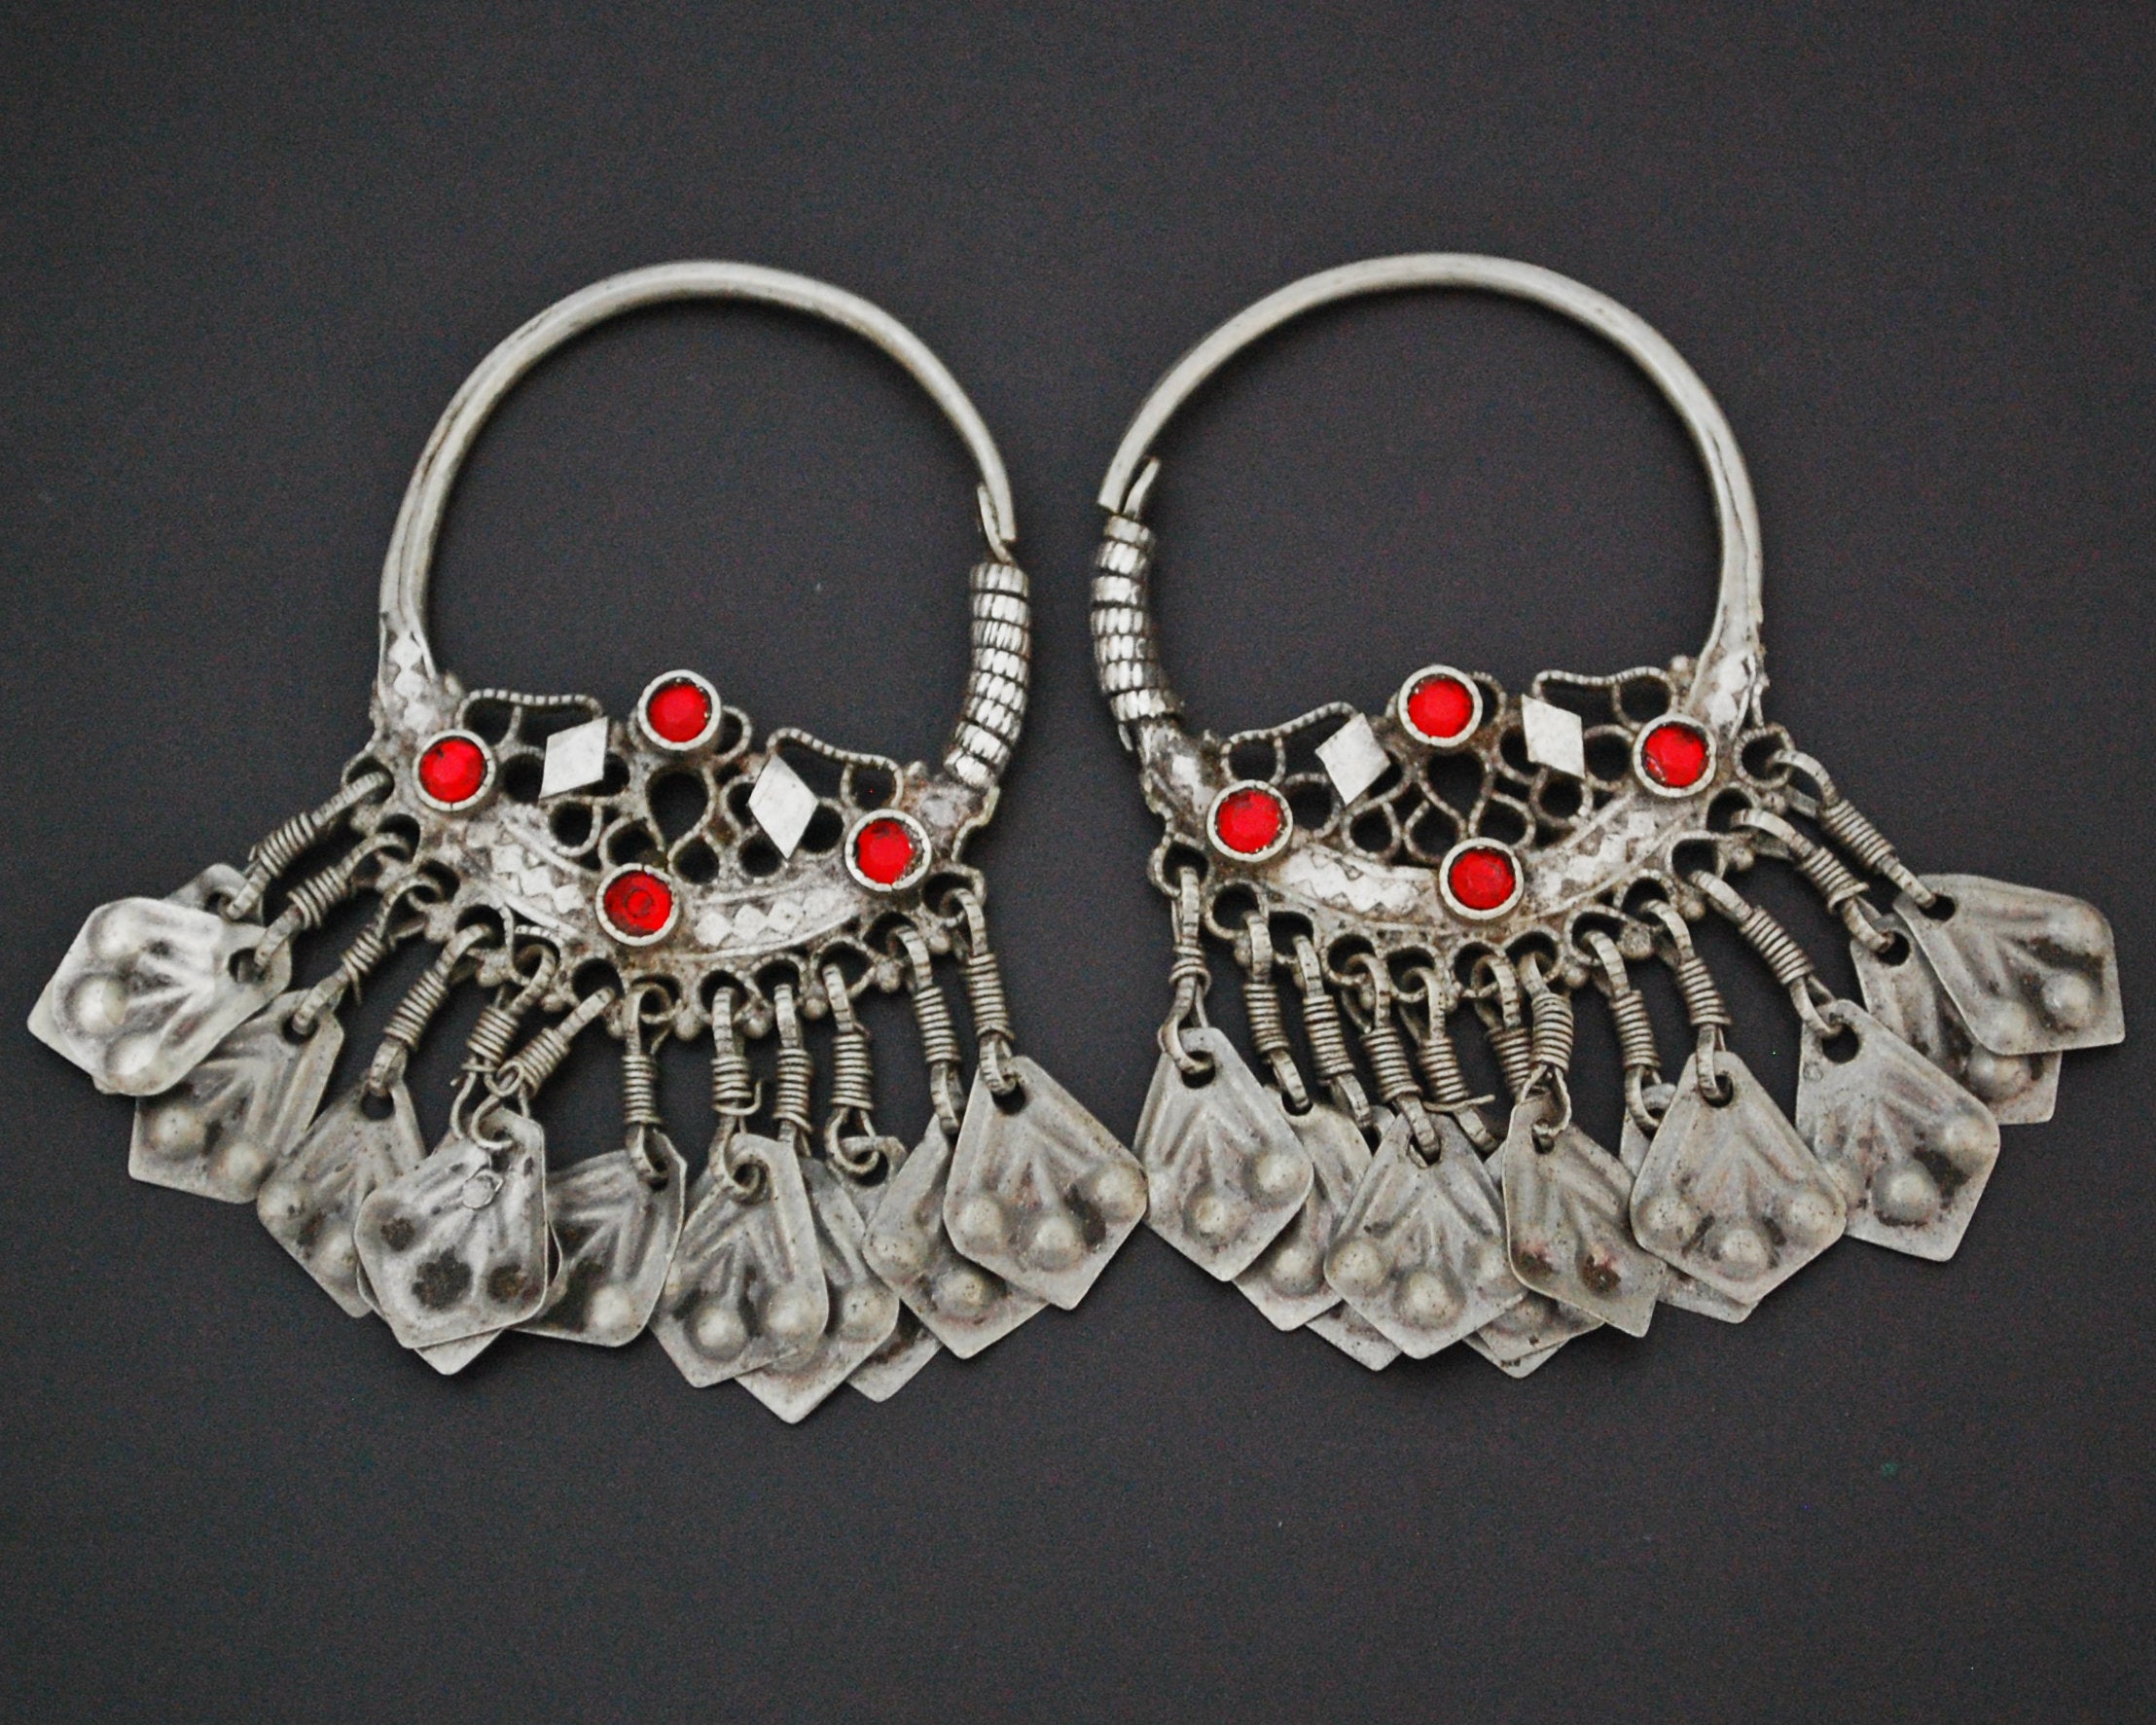 Afghani Hoop Earrings with Tassels and Red Glass